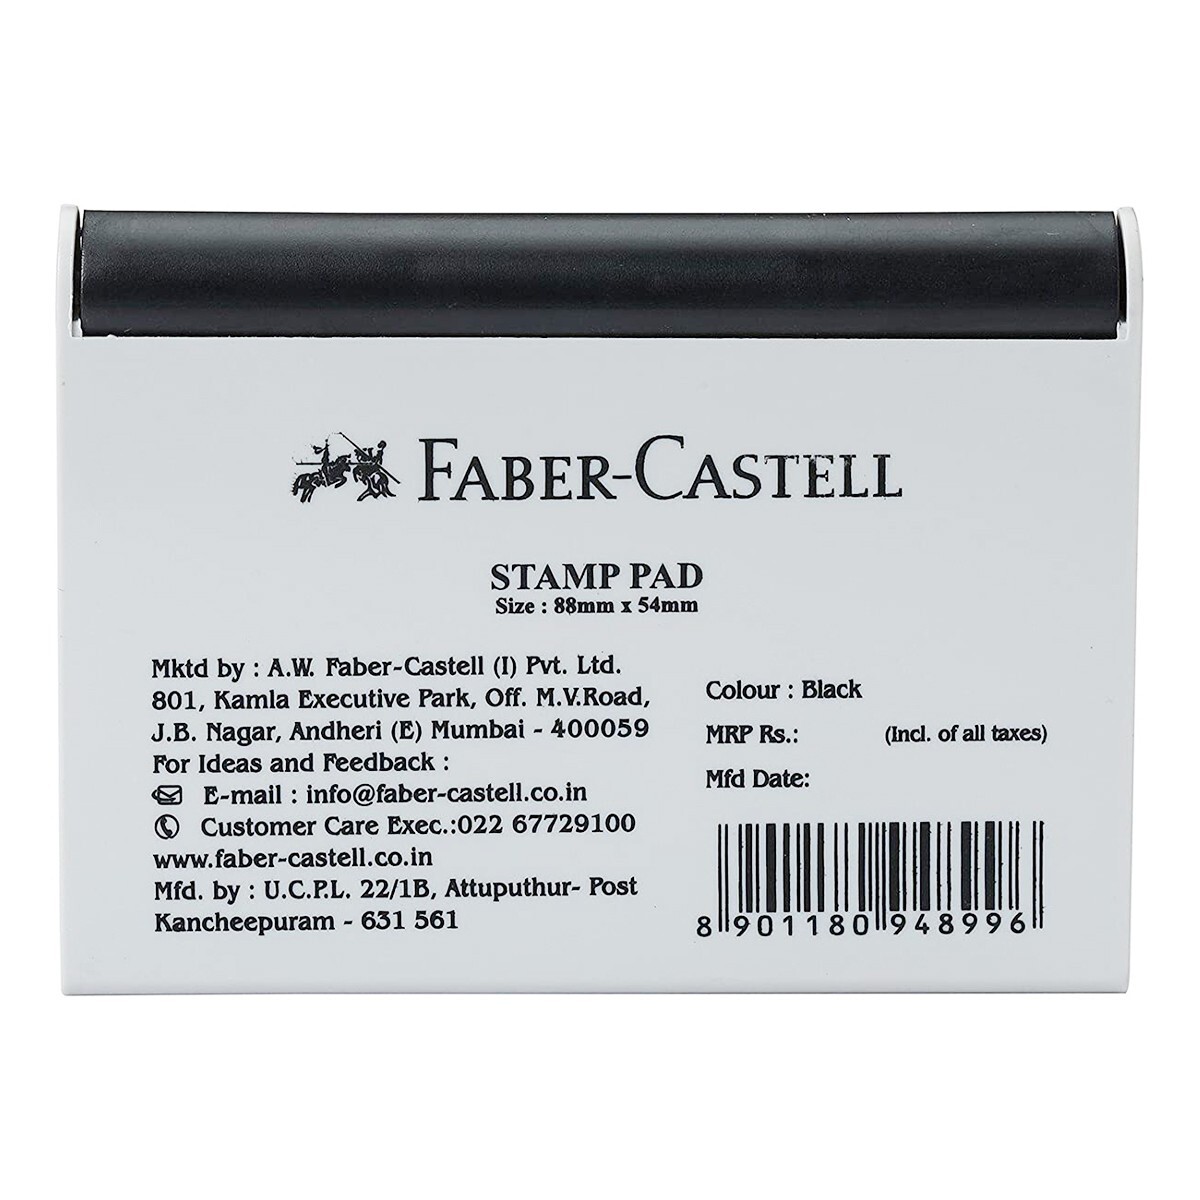 Faber-Castell Stamp Pad-Black-194899